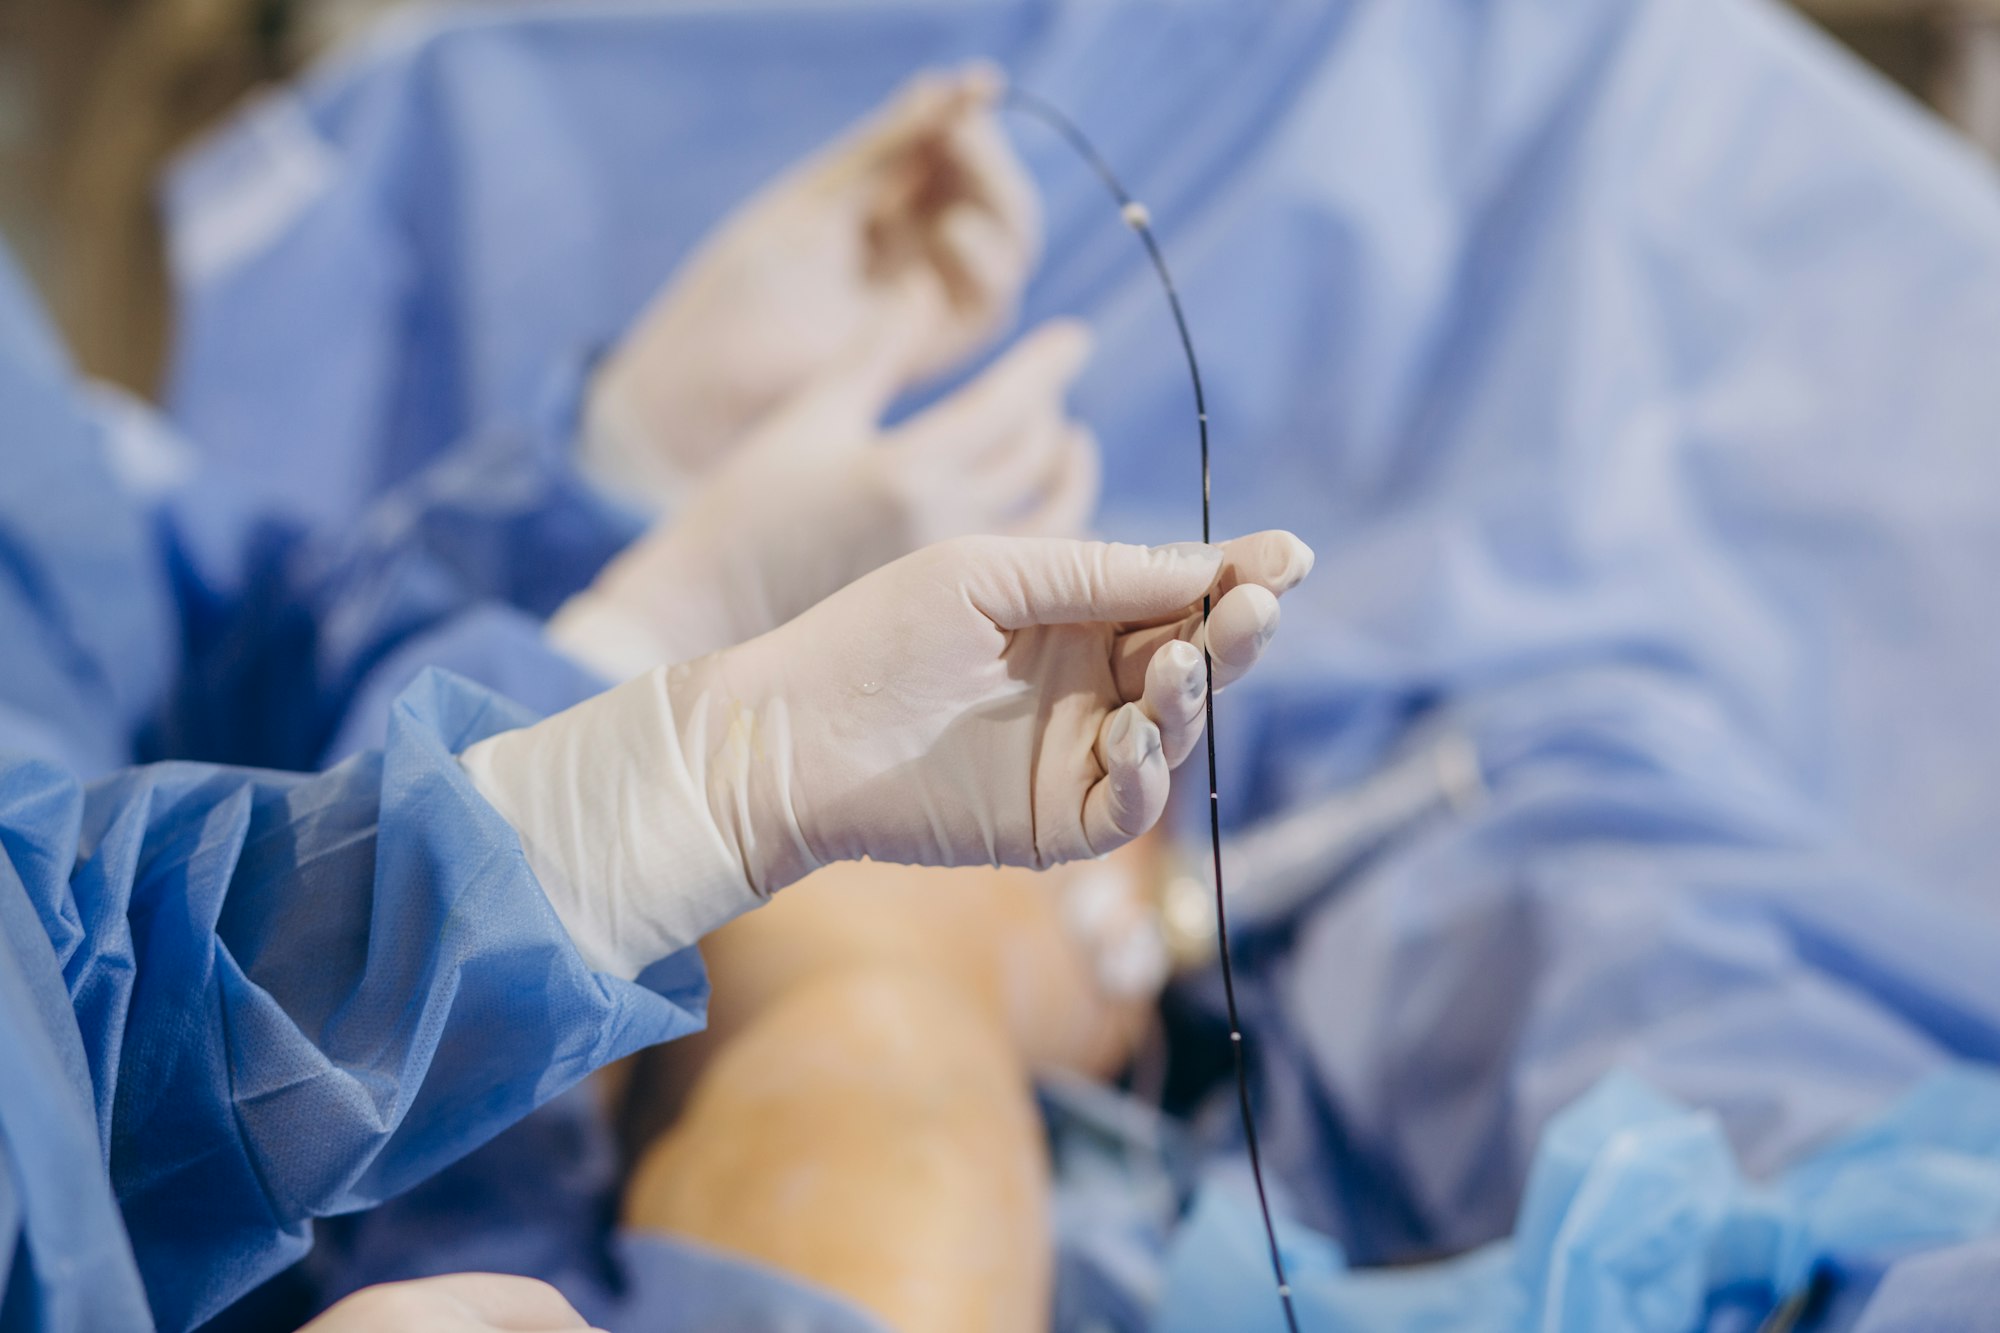 Doctor surgery foot Suture,Percutaneous transluminal angioplasty ,Vascular bypass blood vessel g